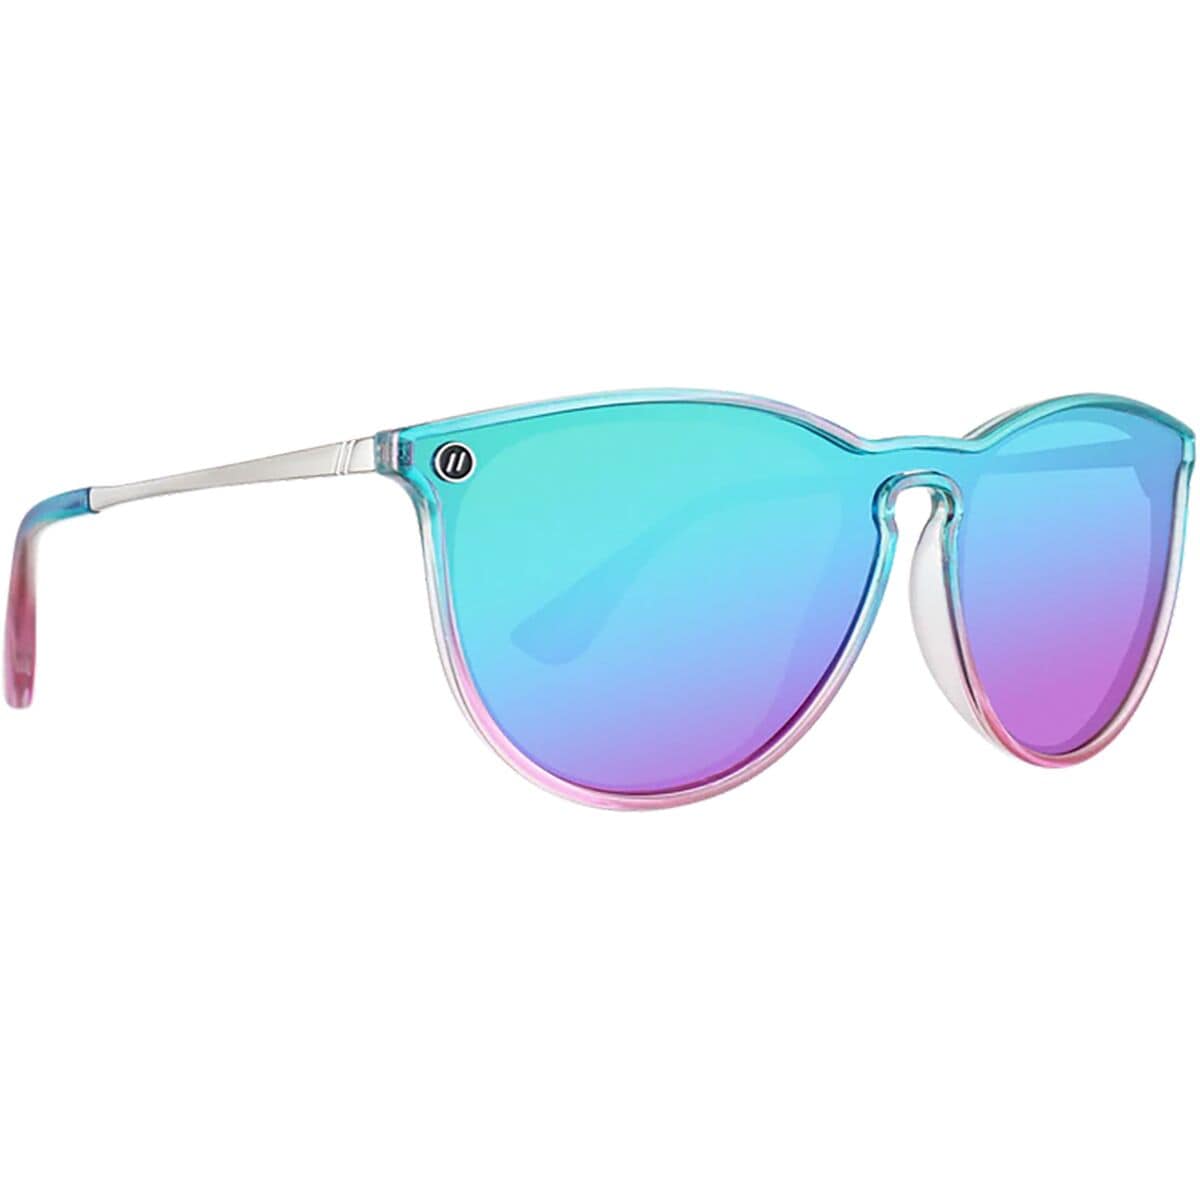 Поляризованные солнцезащитные очки north park x2 Blenders Eyewear, цвет nora rad (pol)